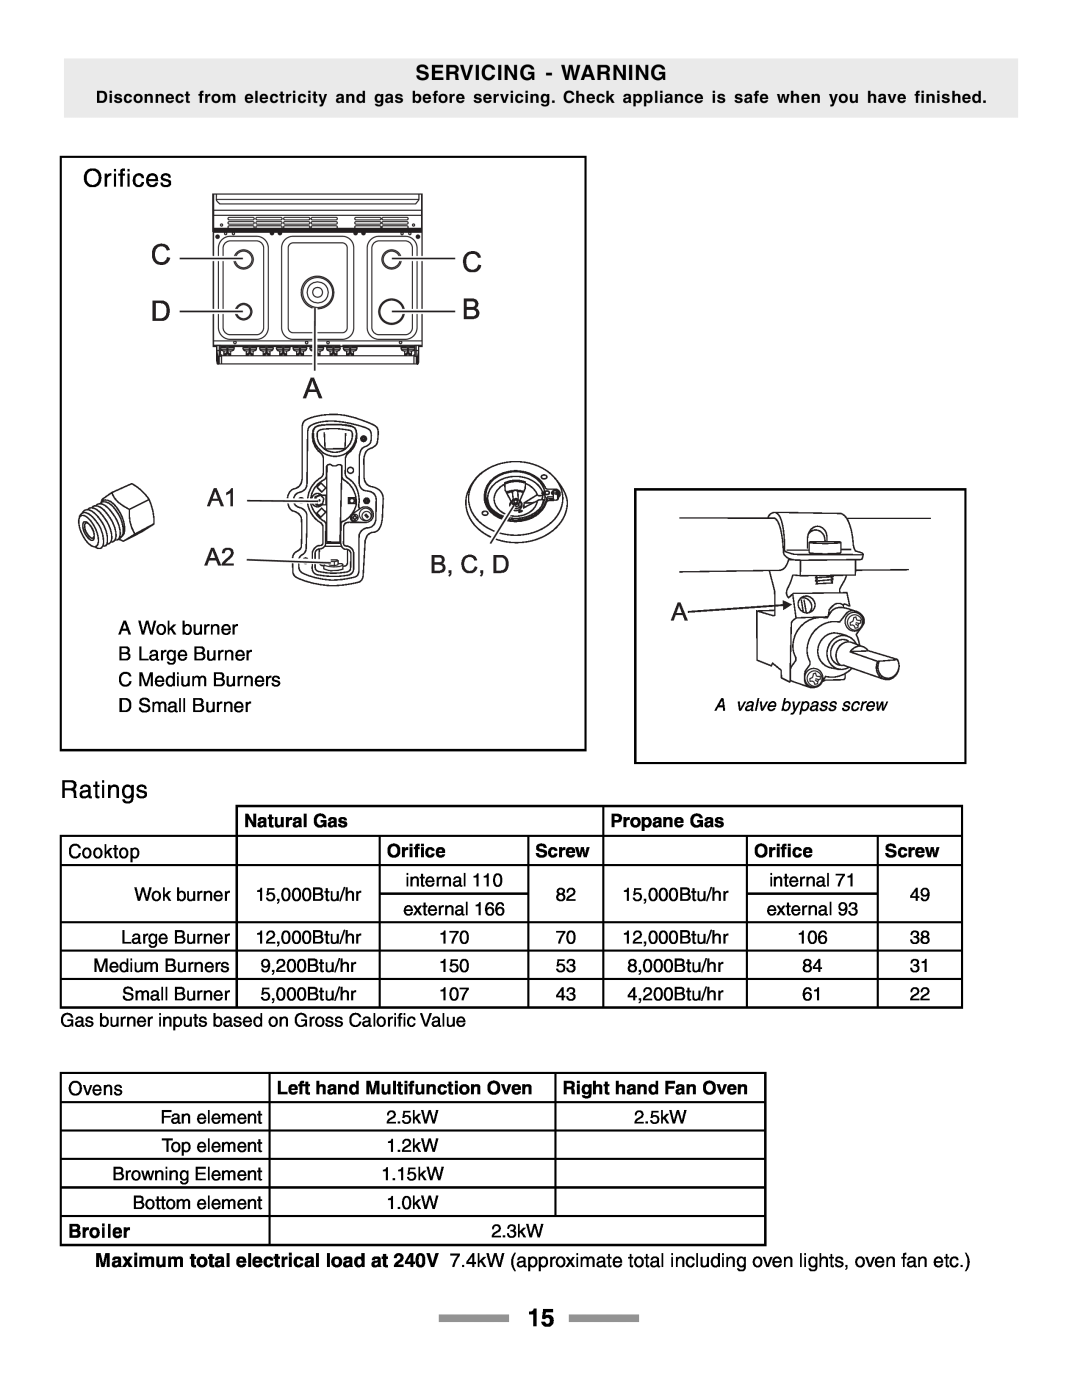 Aga Ranges F104650-01 manual Orifices, Ratings, Servicing - Warning, Broiler, Natural Gas, Propane Gas, Oriﬁce, Screw 